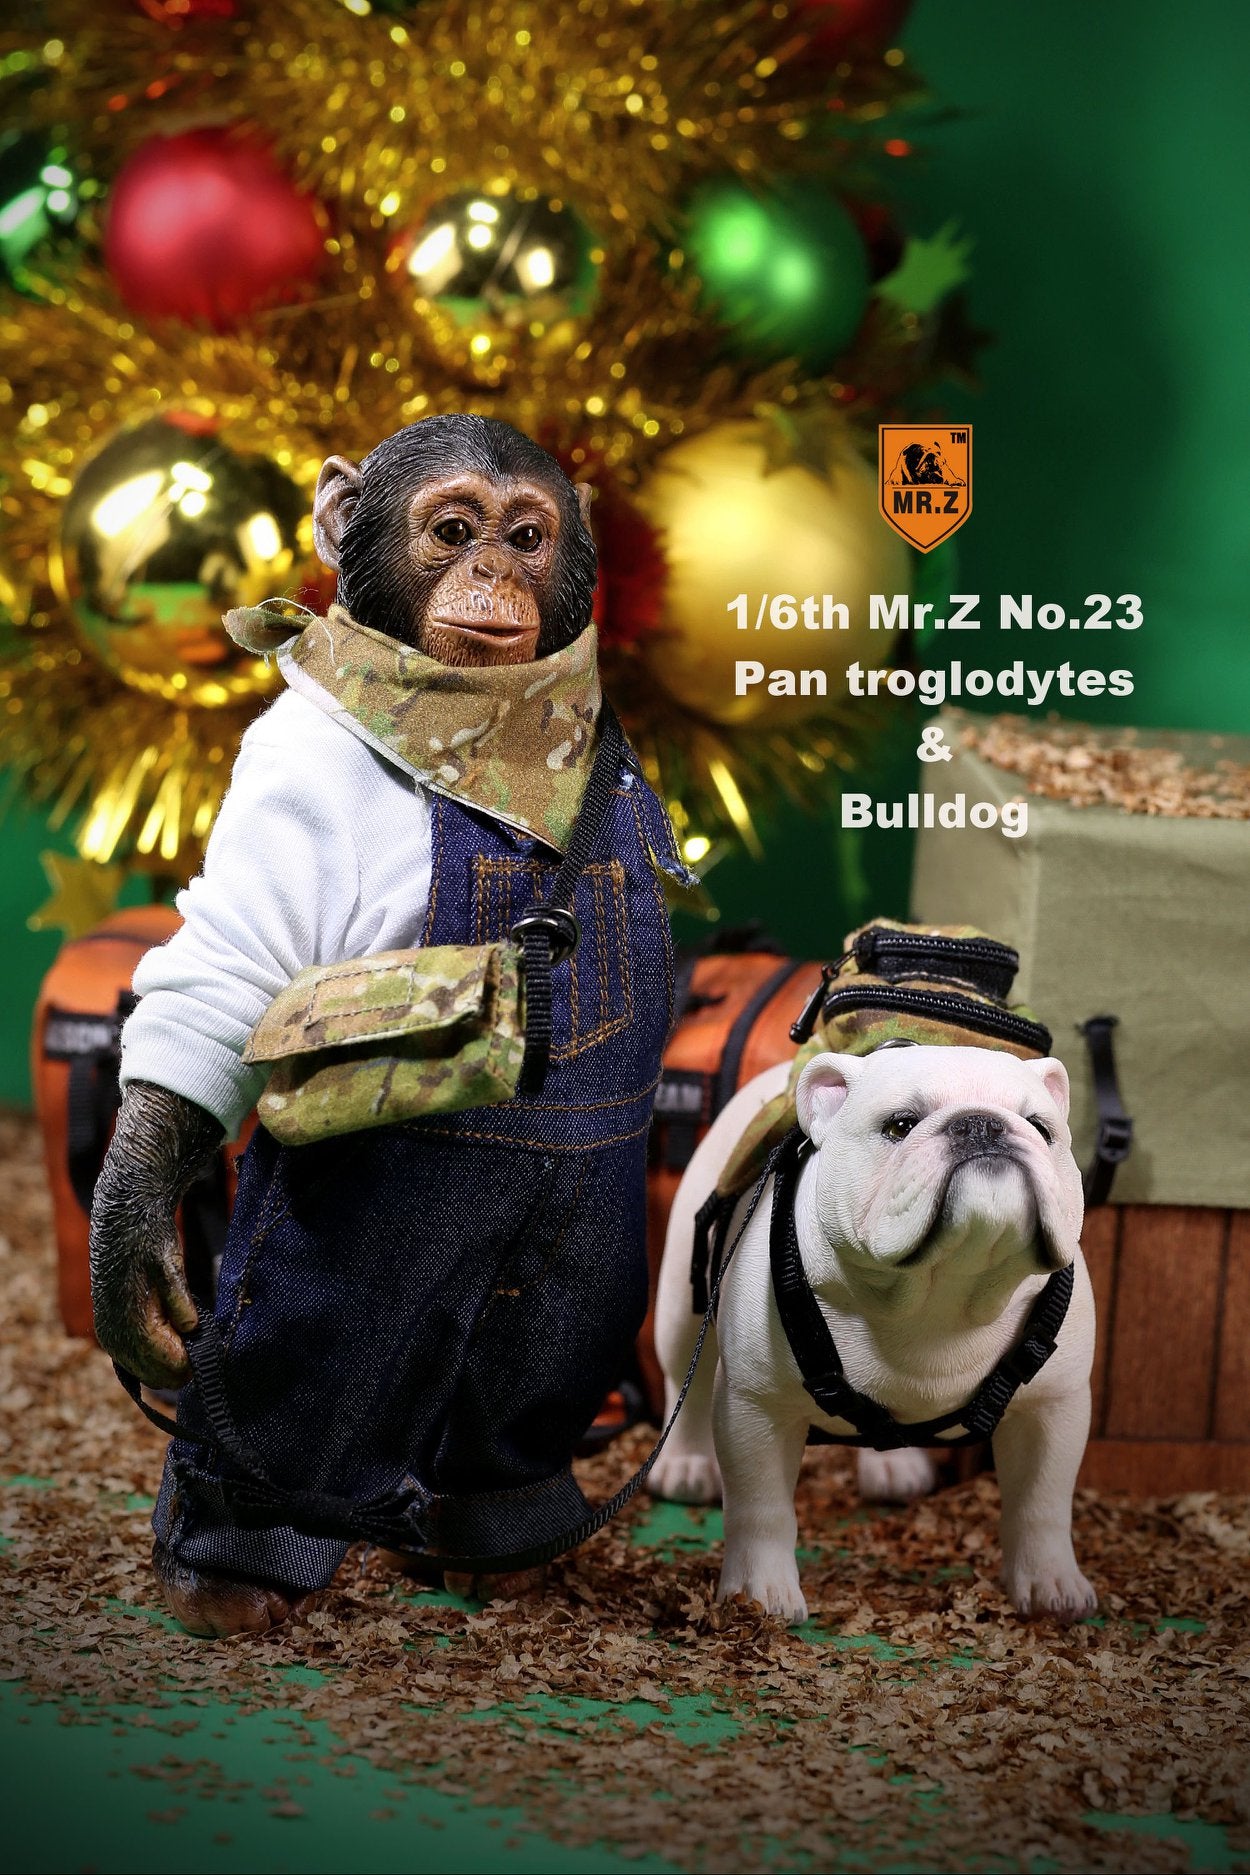 Mr. Z - Real Animal Series No. 23 - Chimpanzee &amp; Bulldog (1/6 Scale) - Marvelous Toys